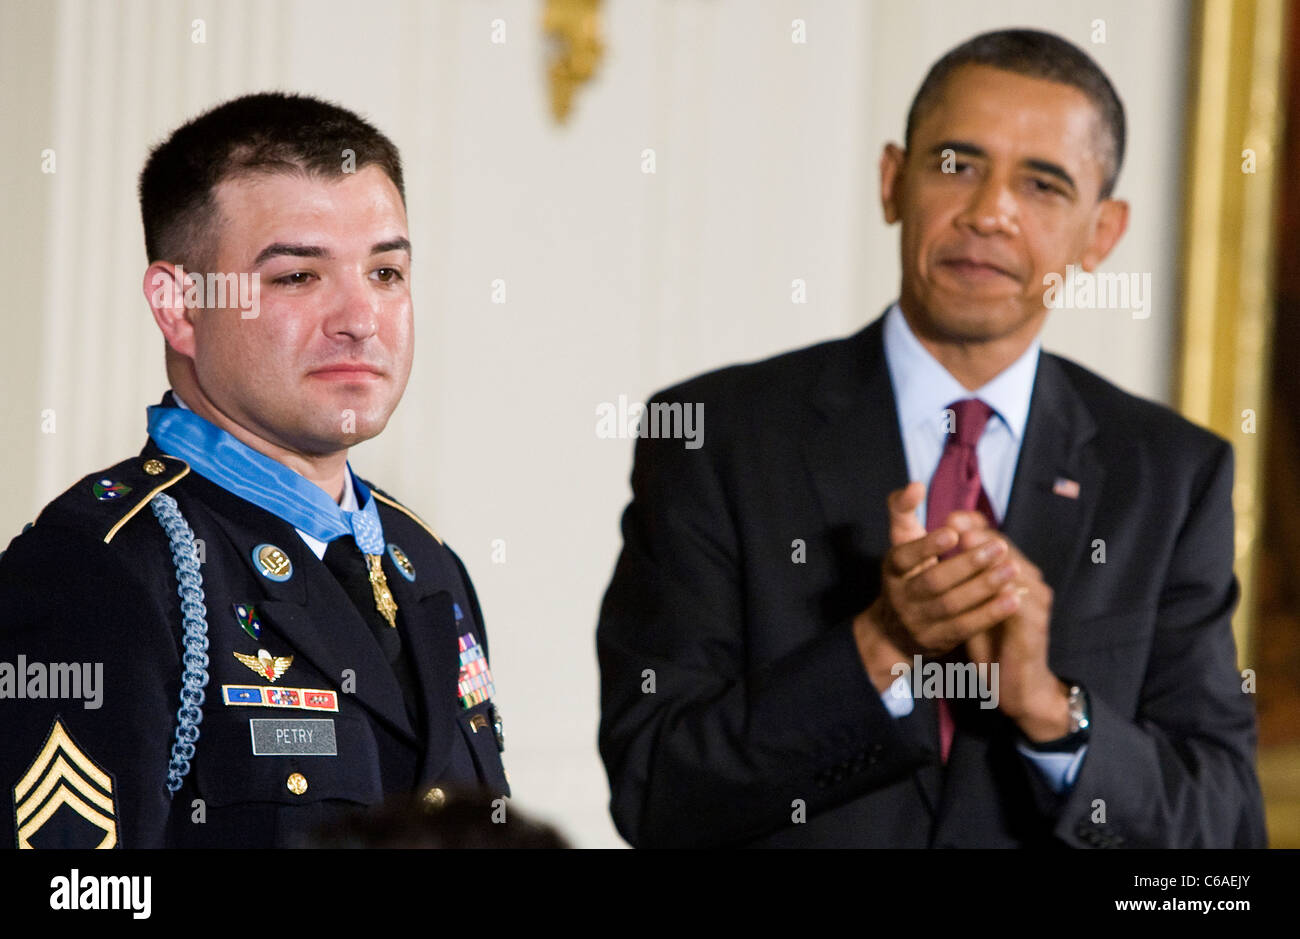 Il presidente Barack Obama awards medaglia d'onore al Sergente di prima classe Leroy Petry. Foto Stock